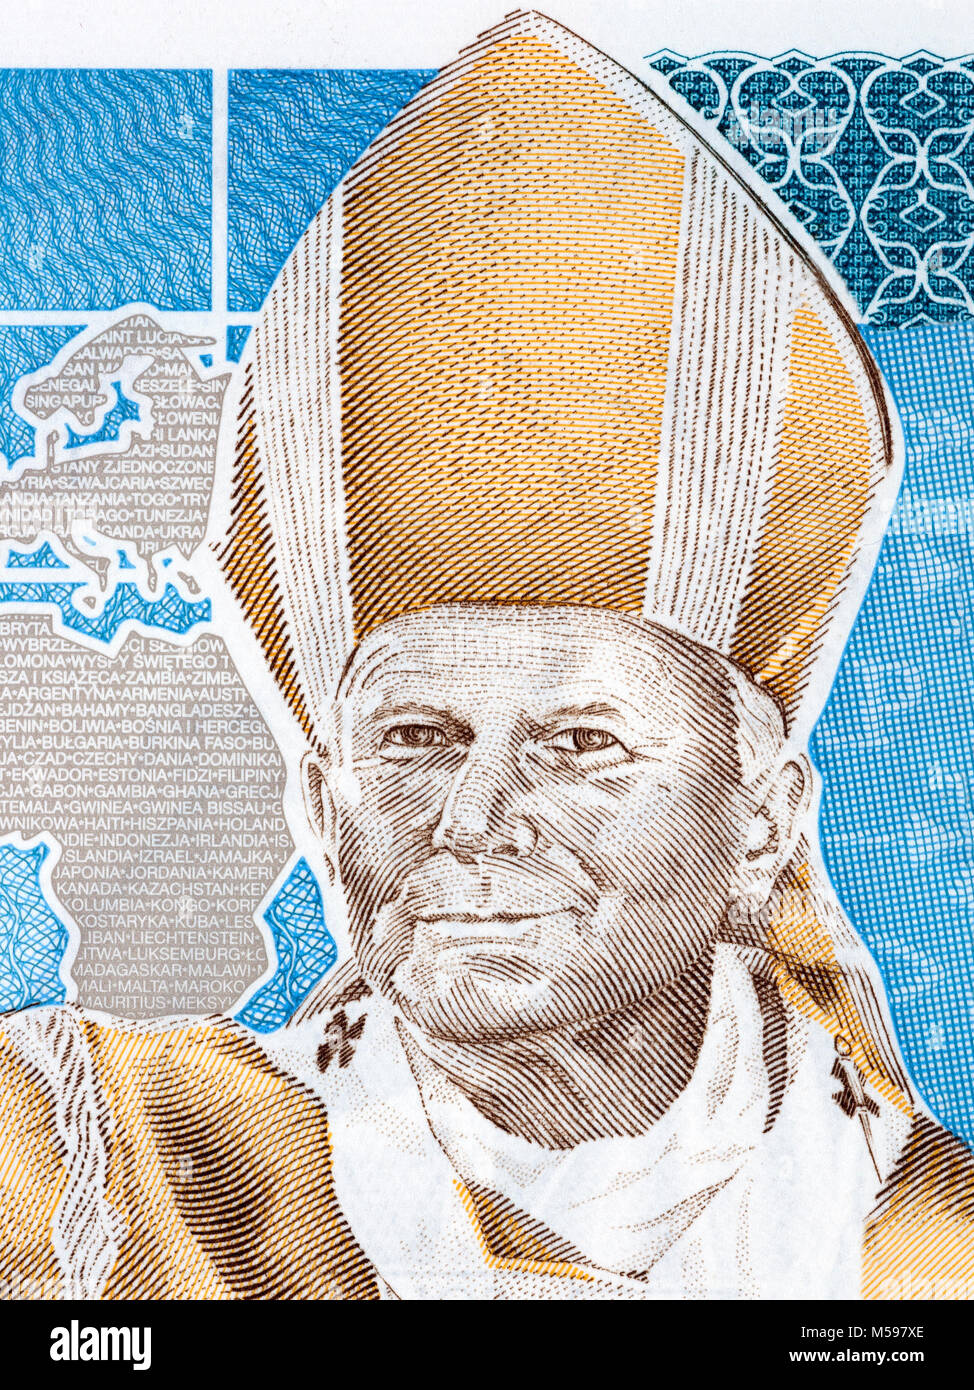 Pope John Paul II portrait from Polish money Stock Photo